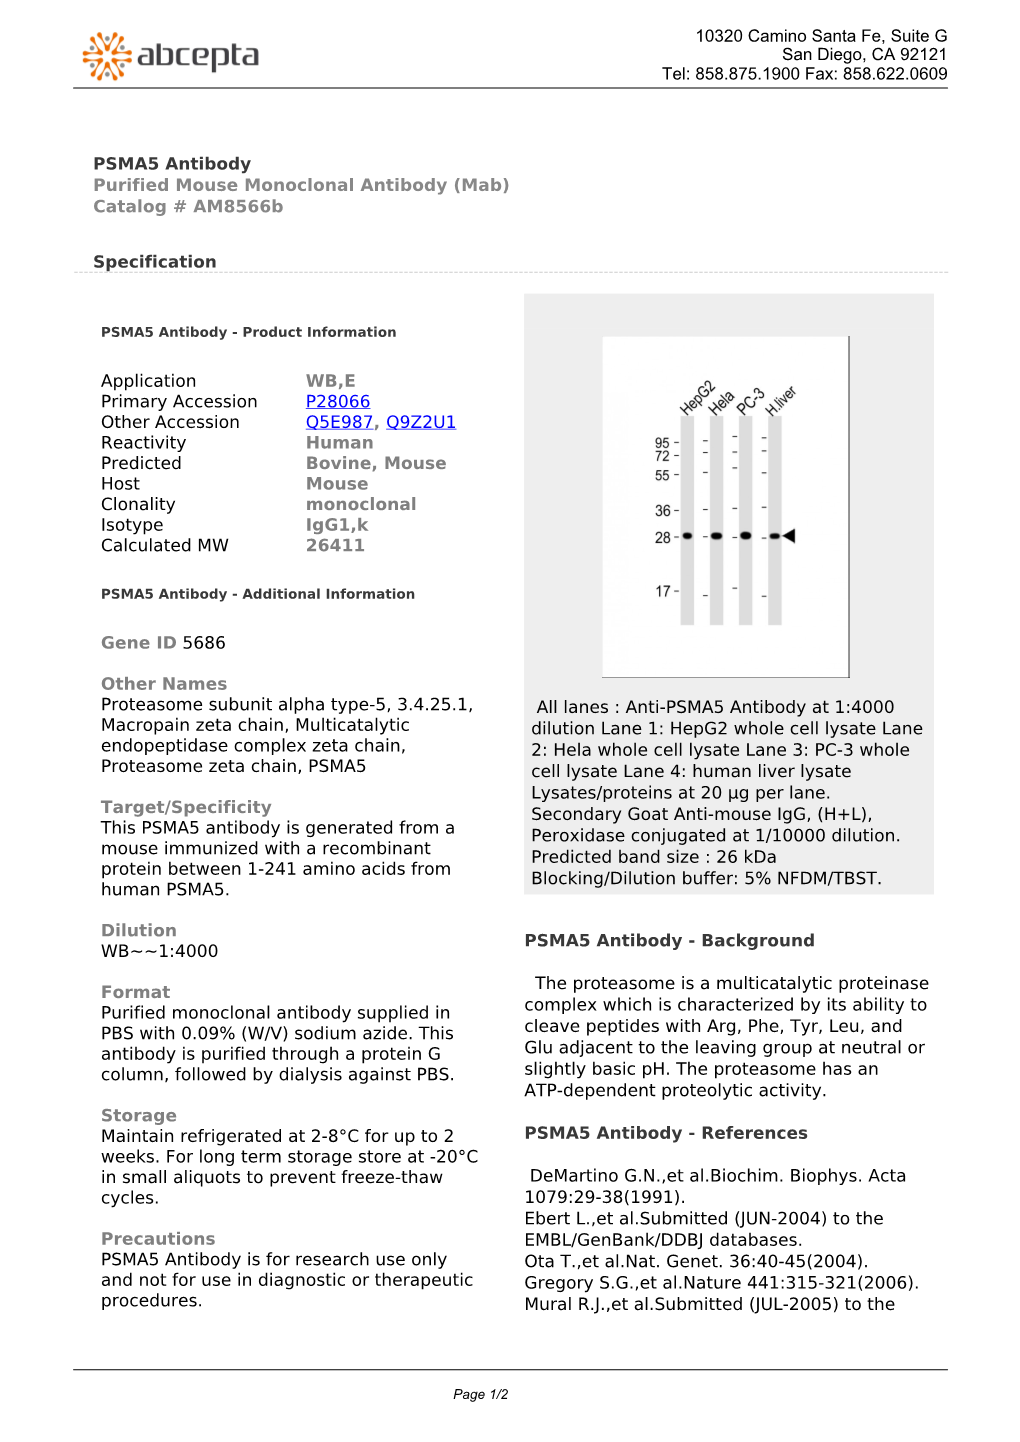 PSMA5 Antibody Purified Mouse Monoclonal Antibody (Mab) Catalog # Am8566b